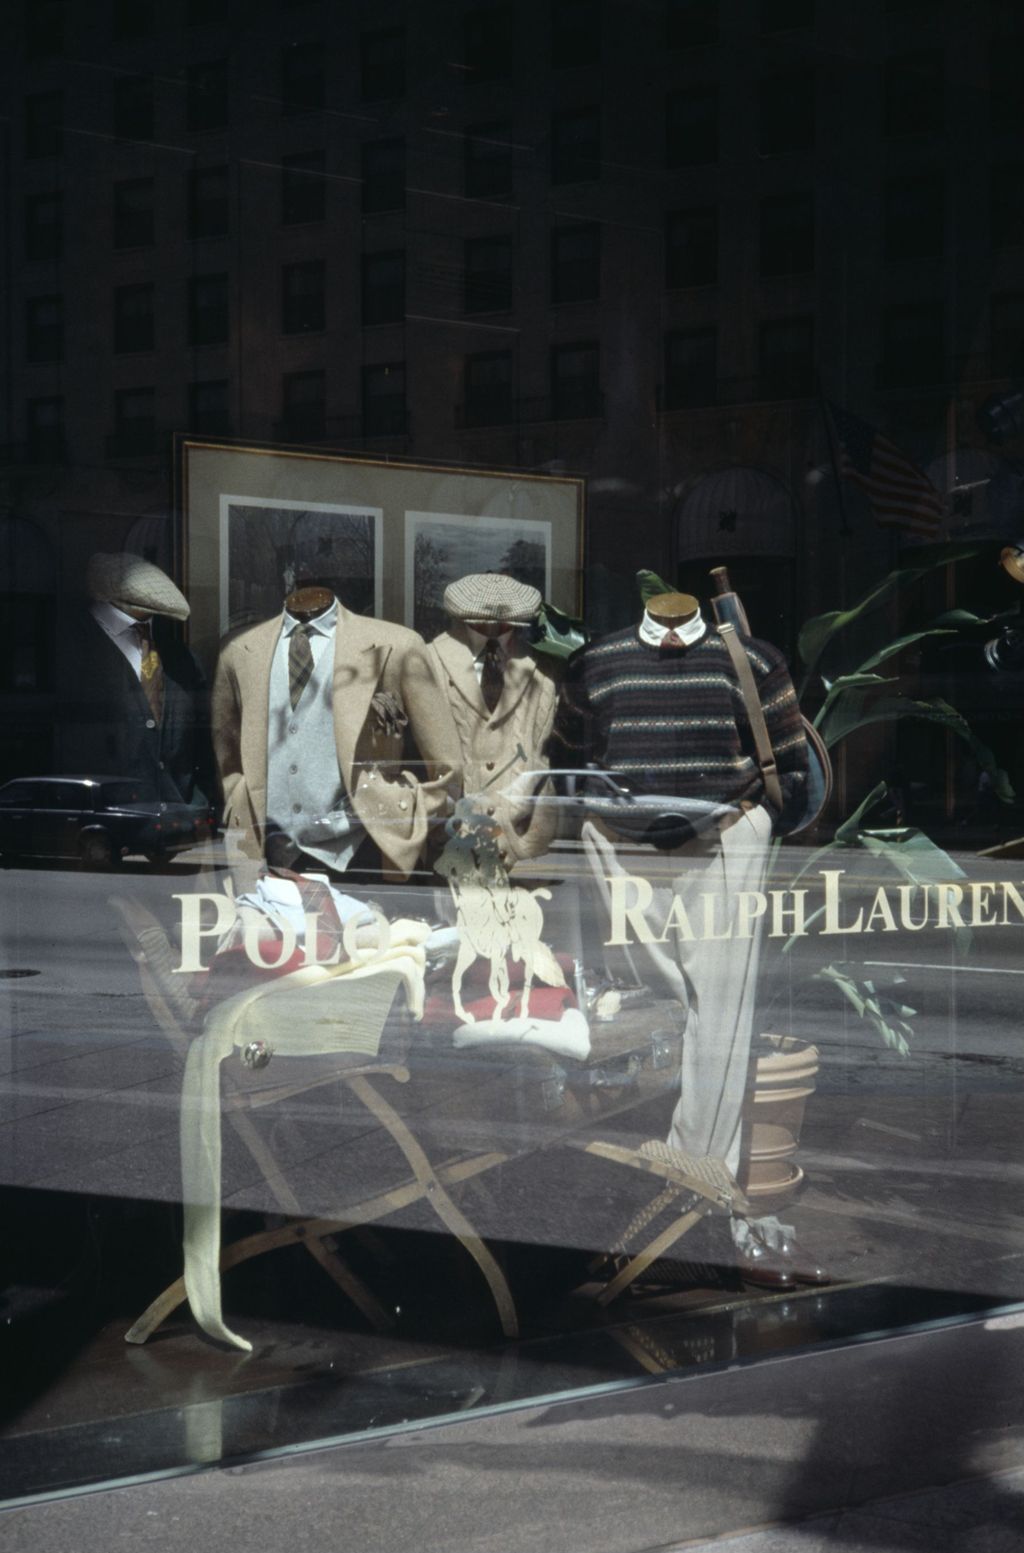 Miniature of Ralph Lauren shop window, North Michigan Avenue